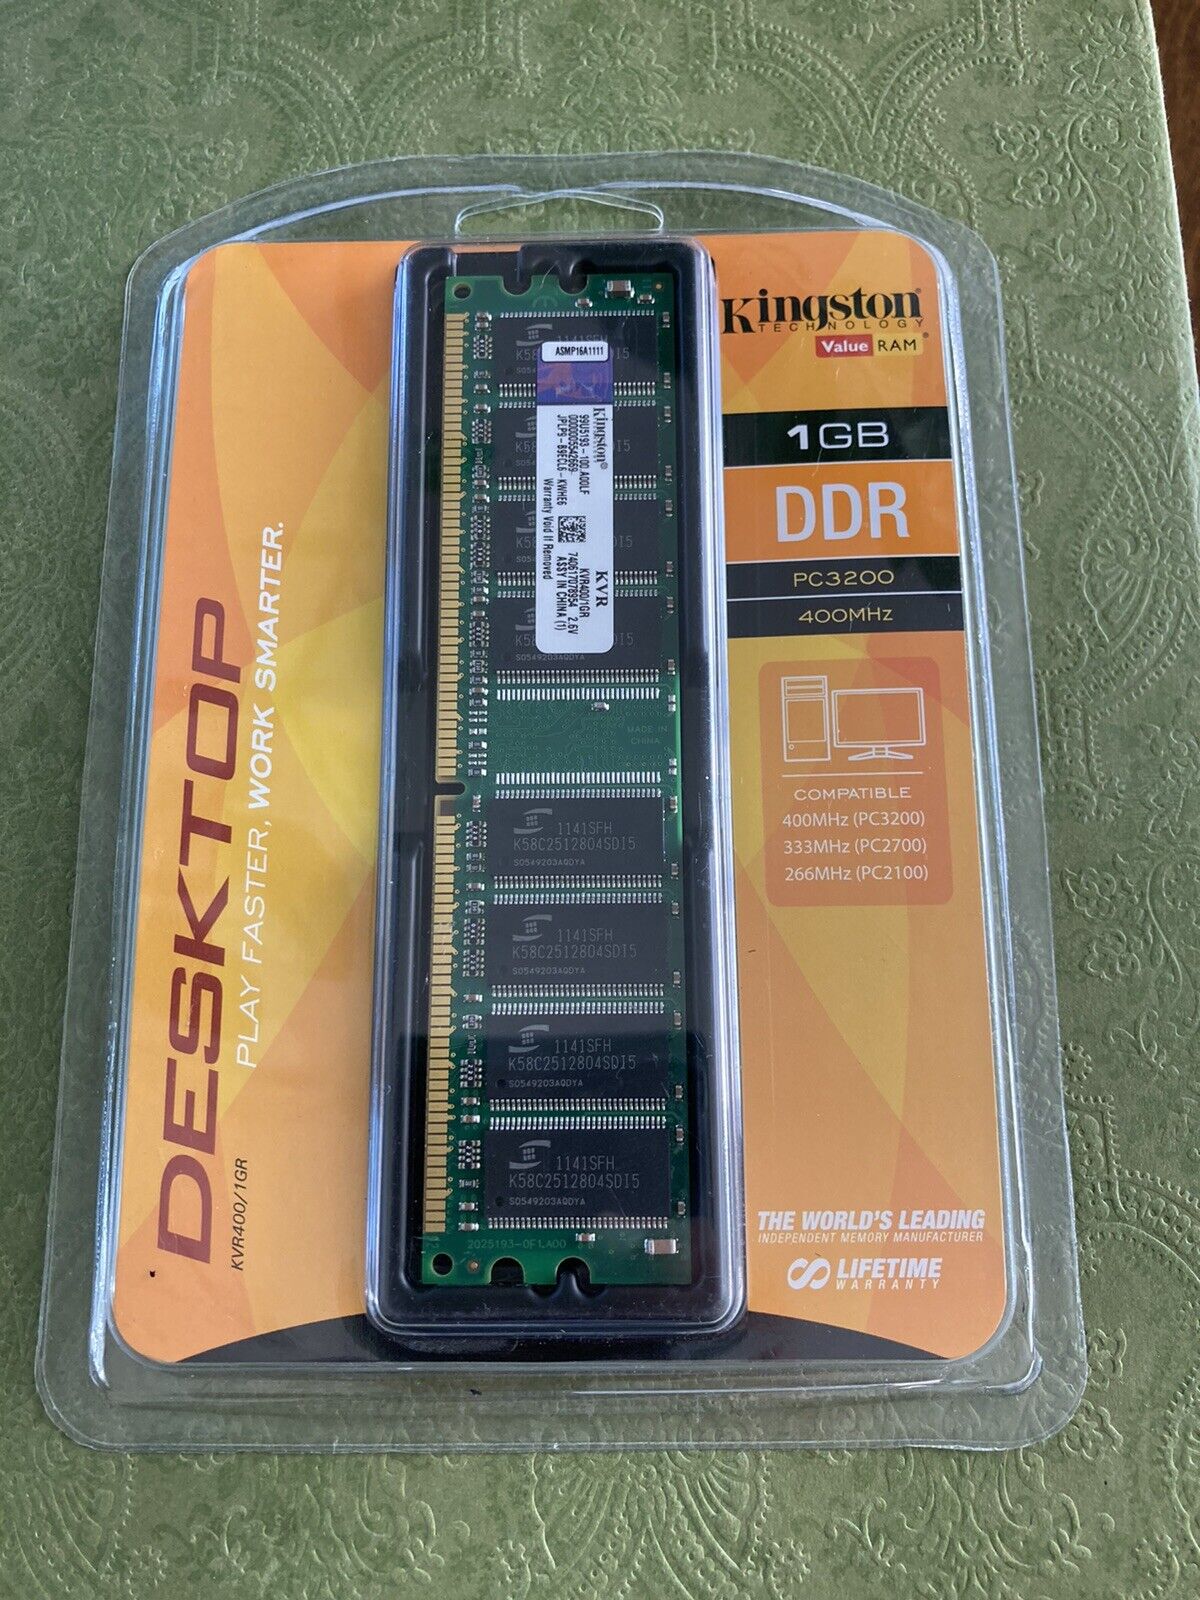 Genuine Kingston Value Ram (KVR400 / 1GB) Desktop PC3200 Memory Stick 